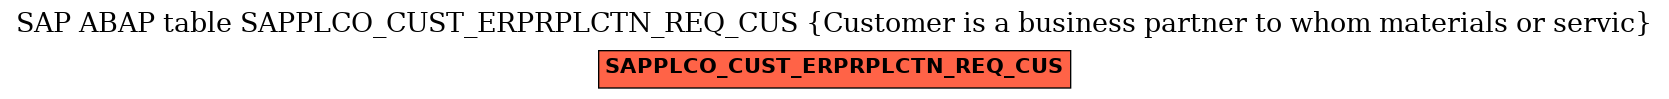 E-R Diagram for table SAPPLCO_CUST_ERPRPLCTN_REQ_CUS (Customer is a business partner to whom materials or servic)